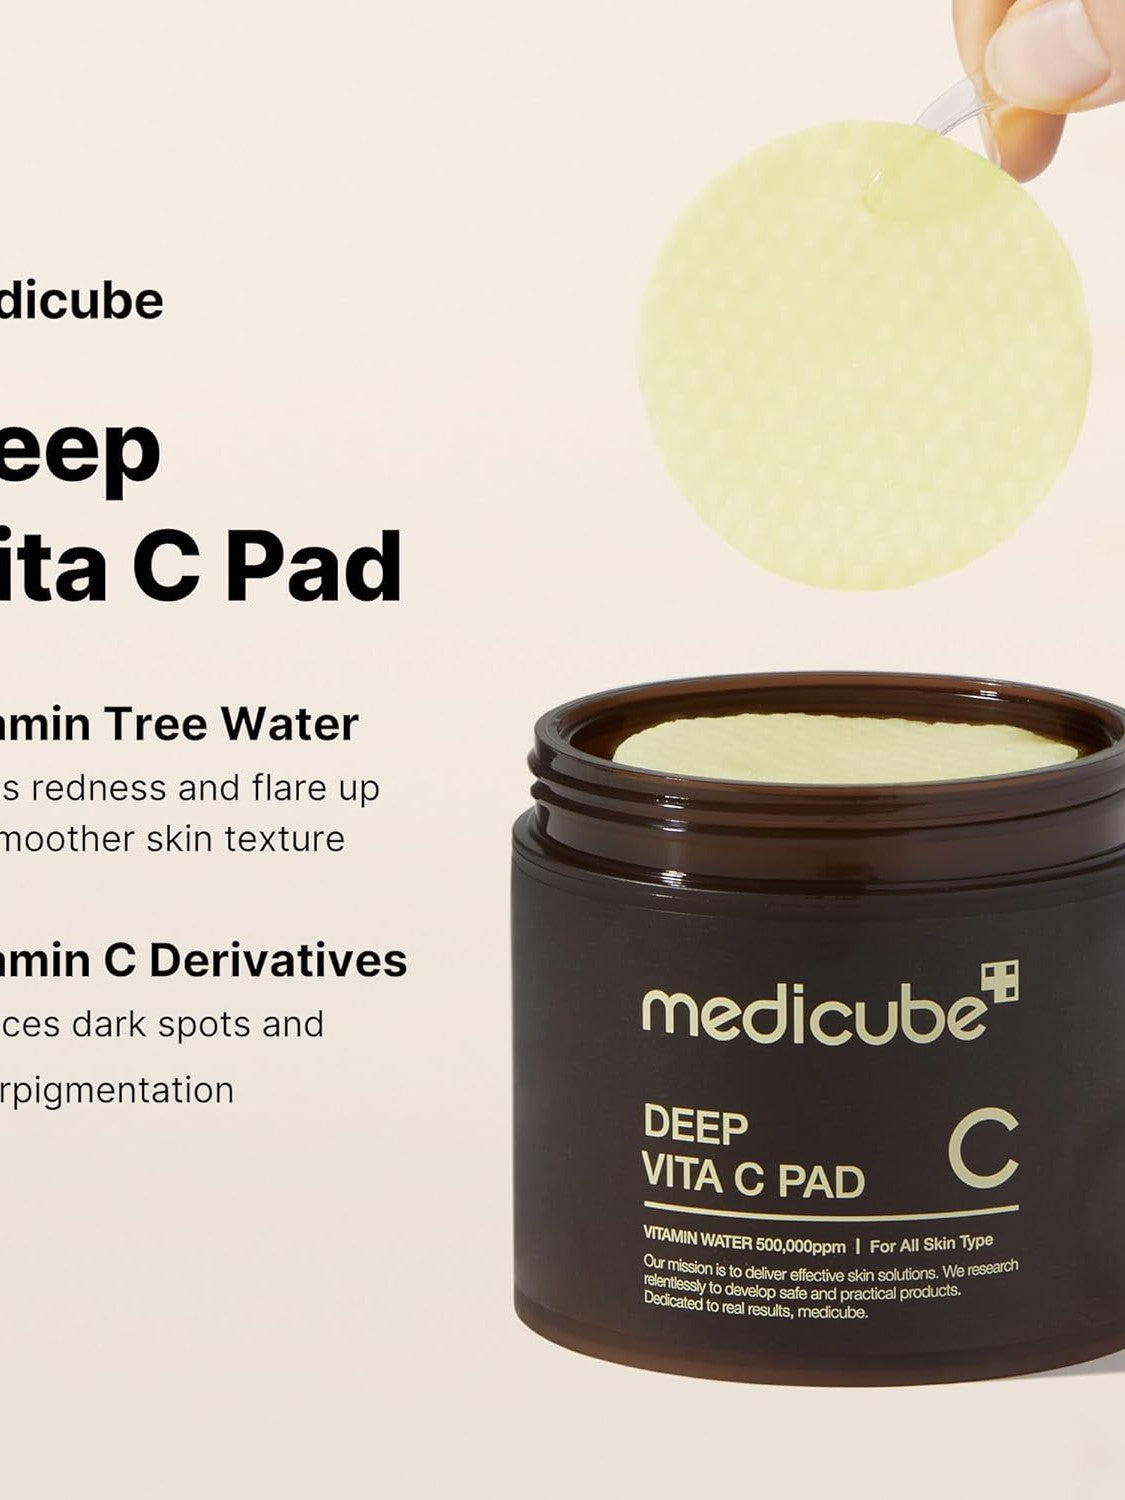 Medicube Deep Vita C Pad